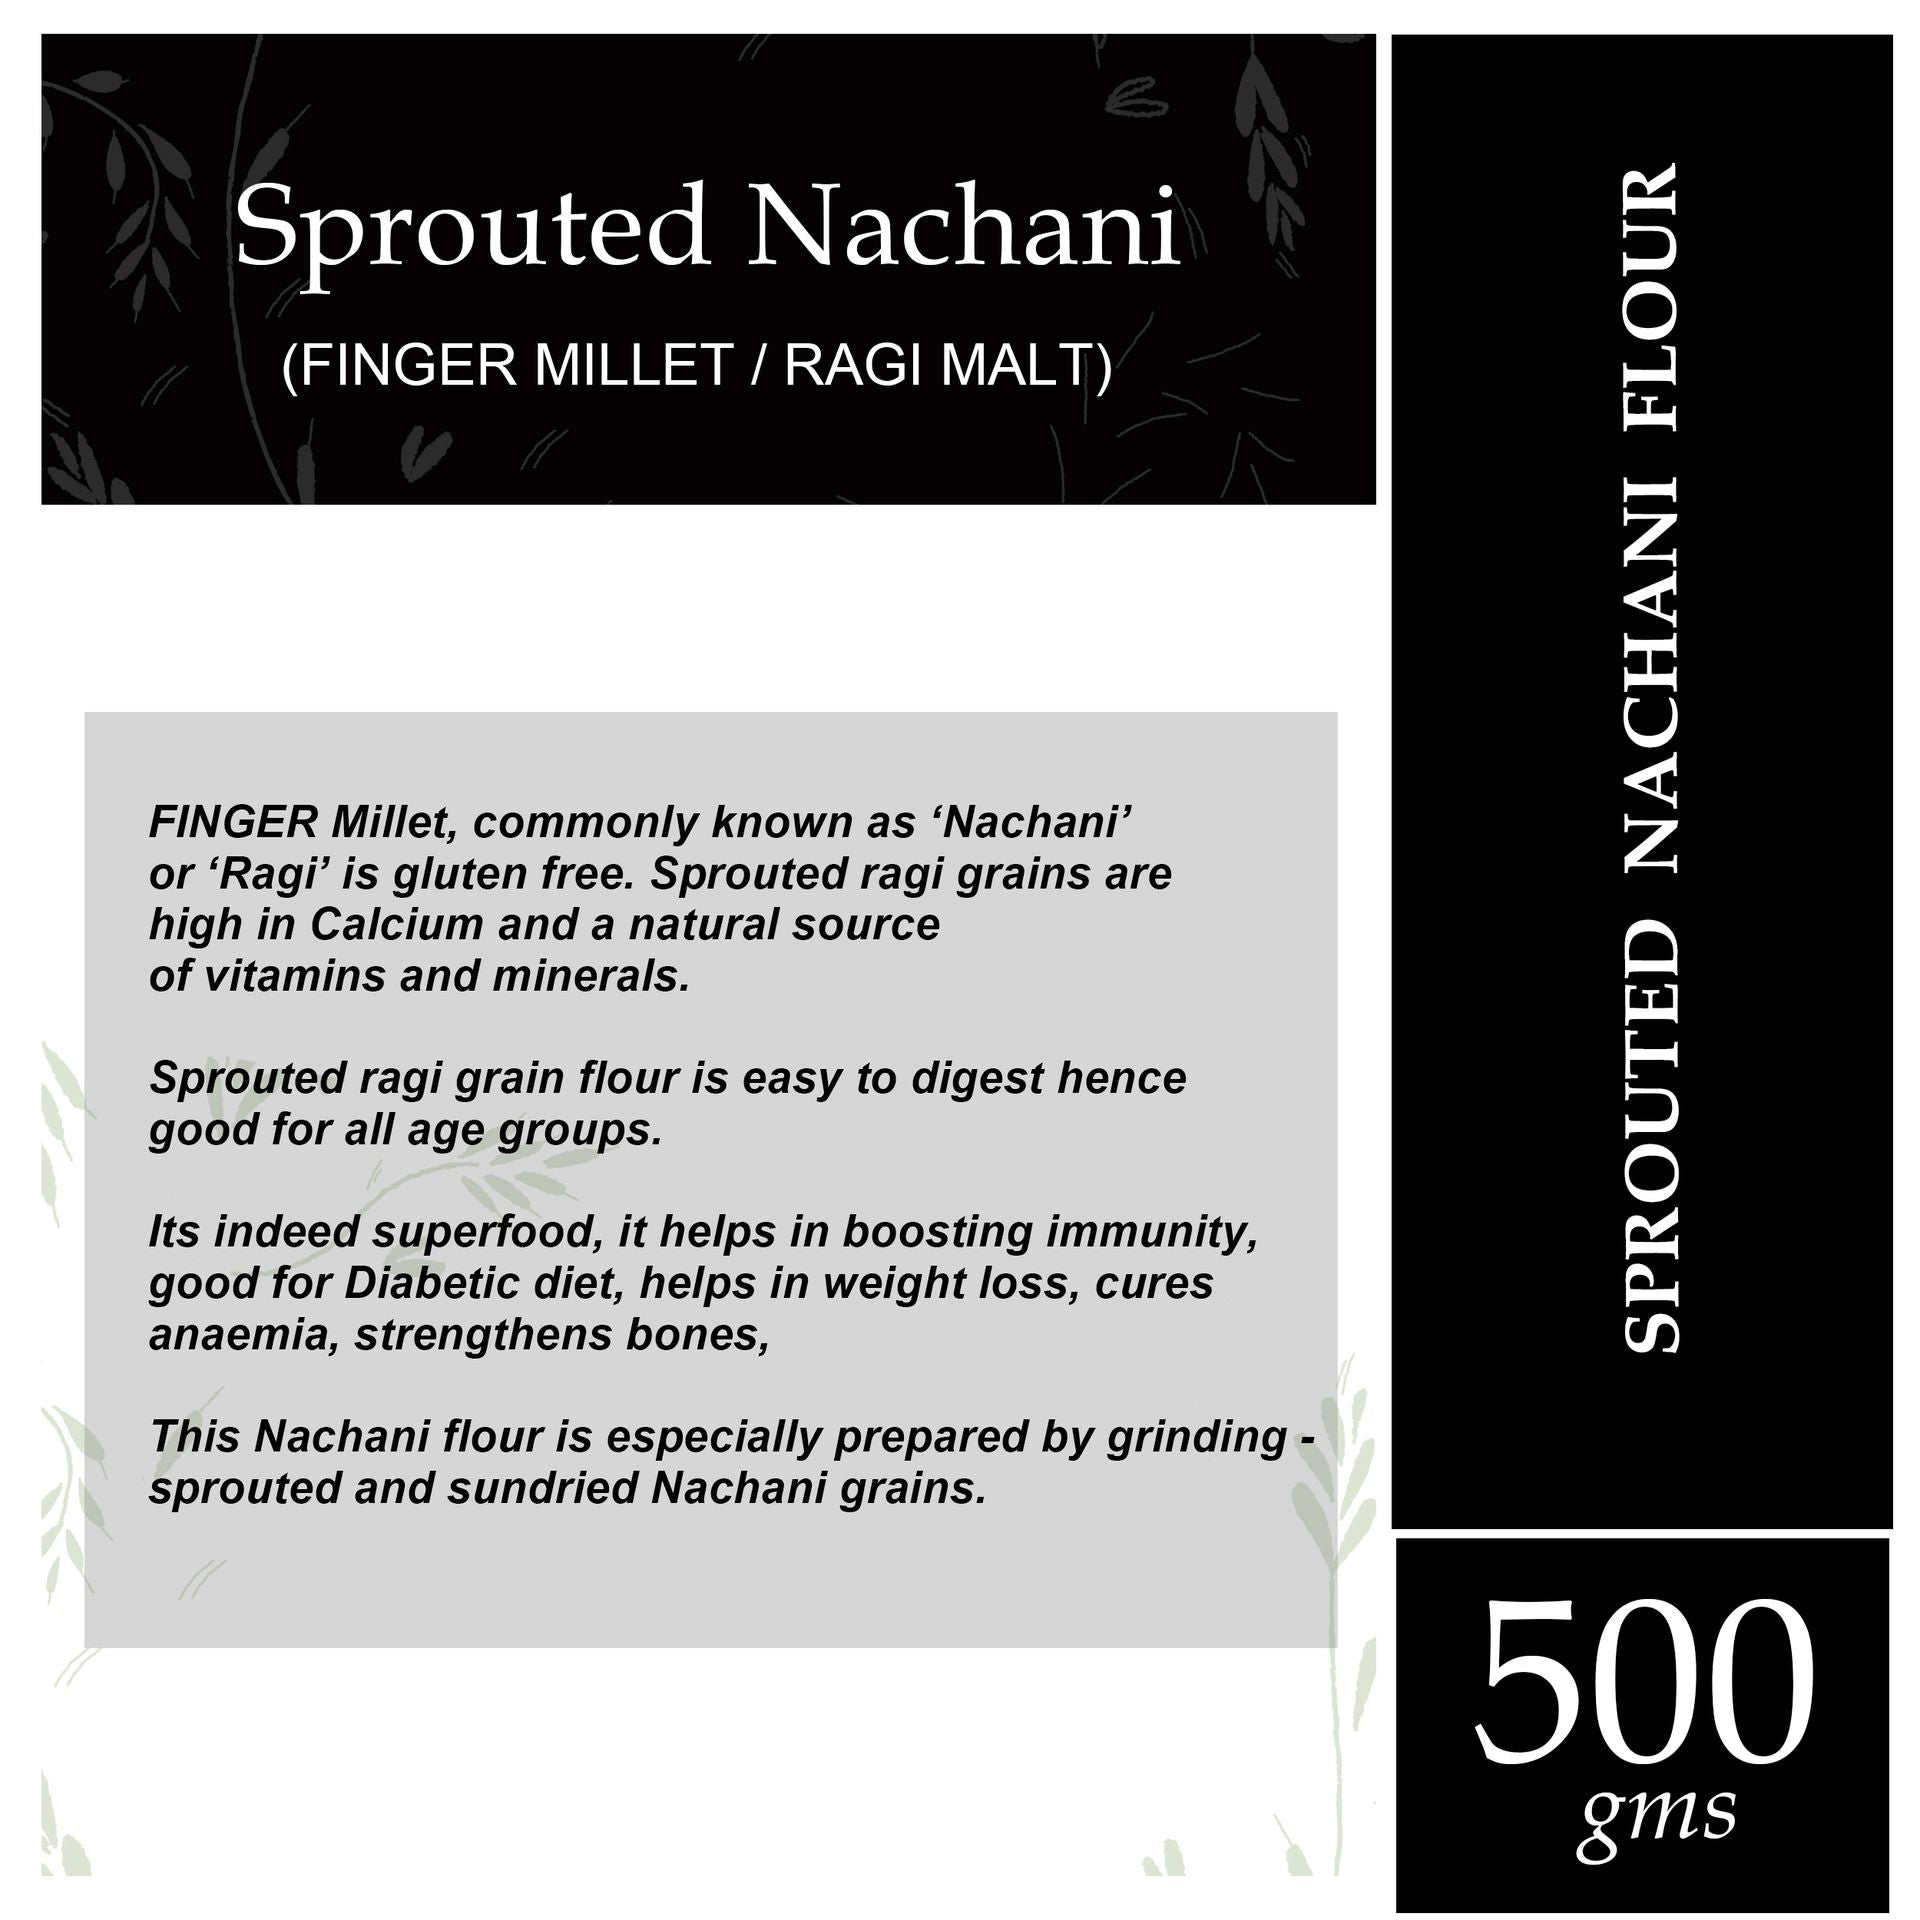 Curryfeast Sprouted Nachani (Ragi) Flour 500 gms - hfnl!fe